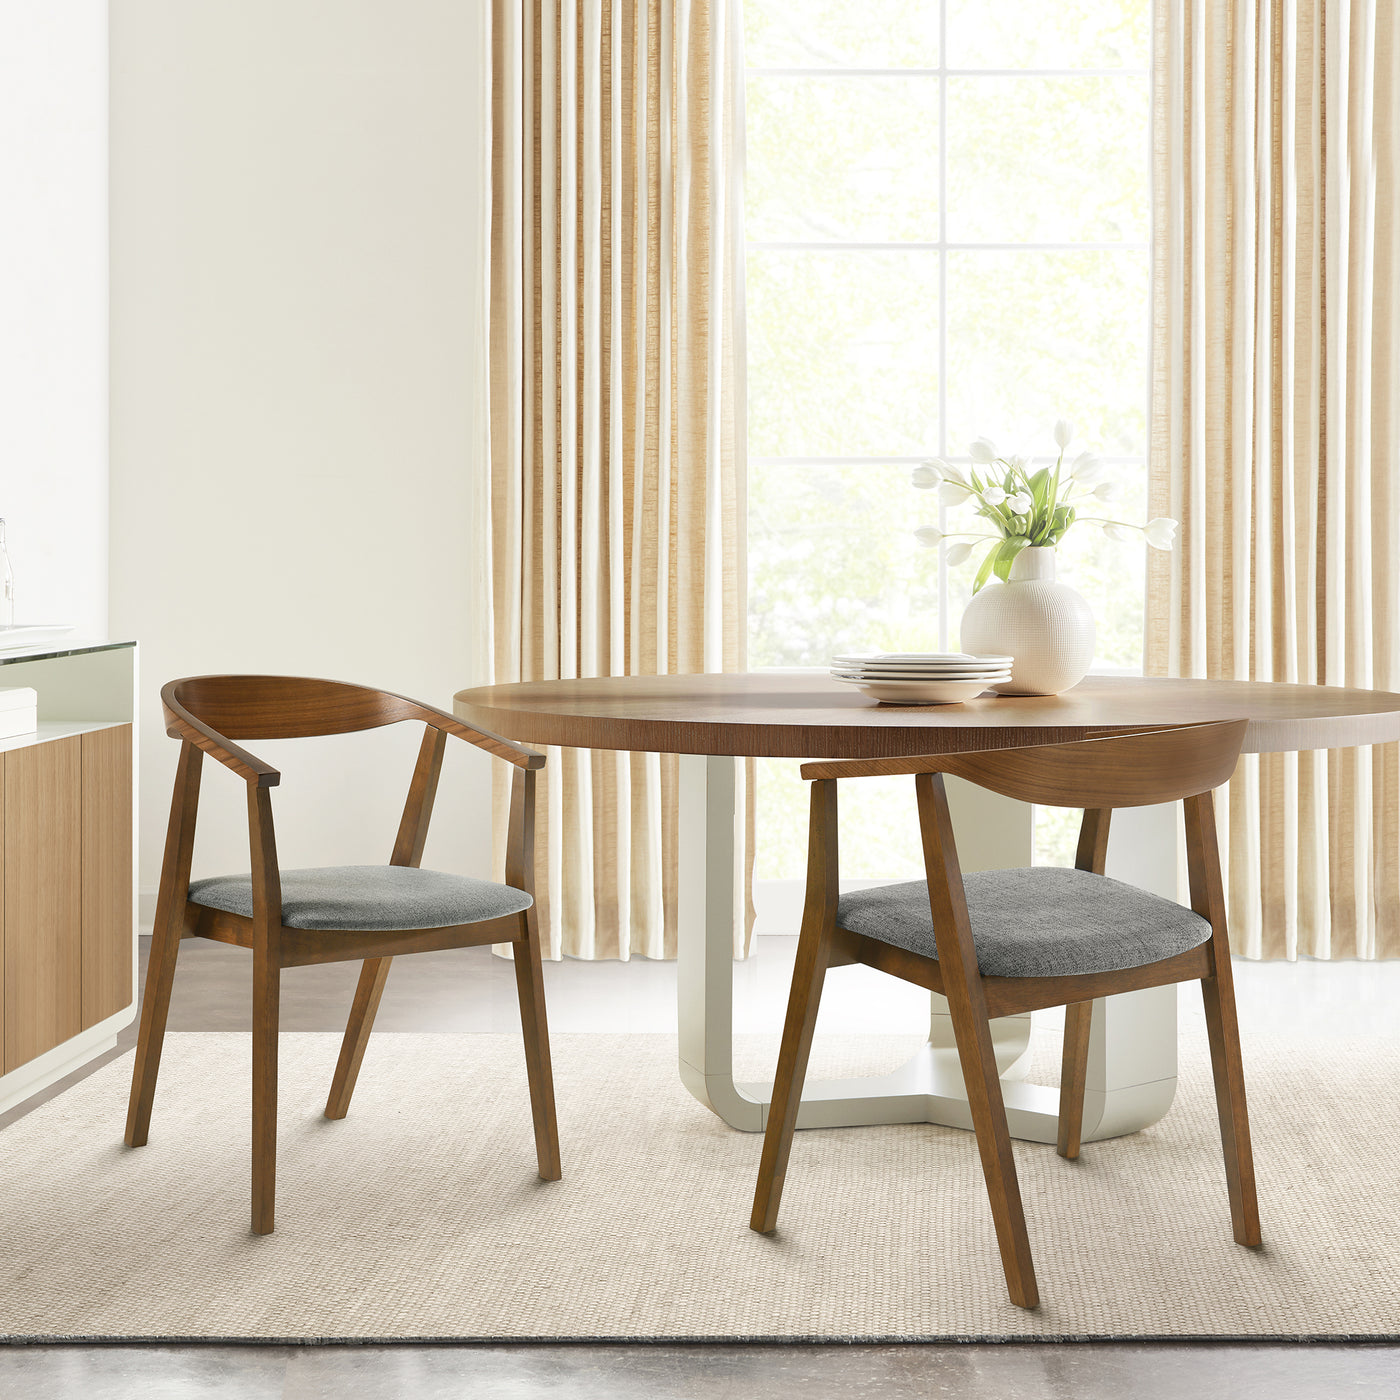 Santana Upholstered Wood Dining Chair - Set of 2